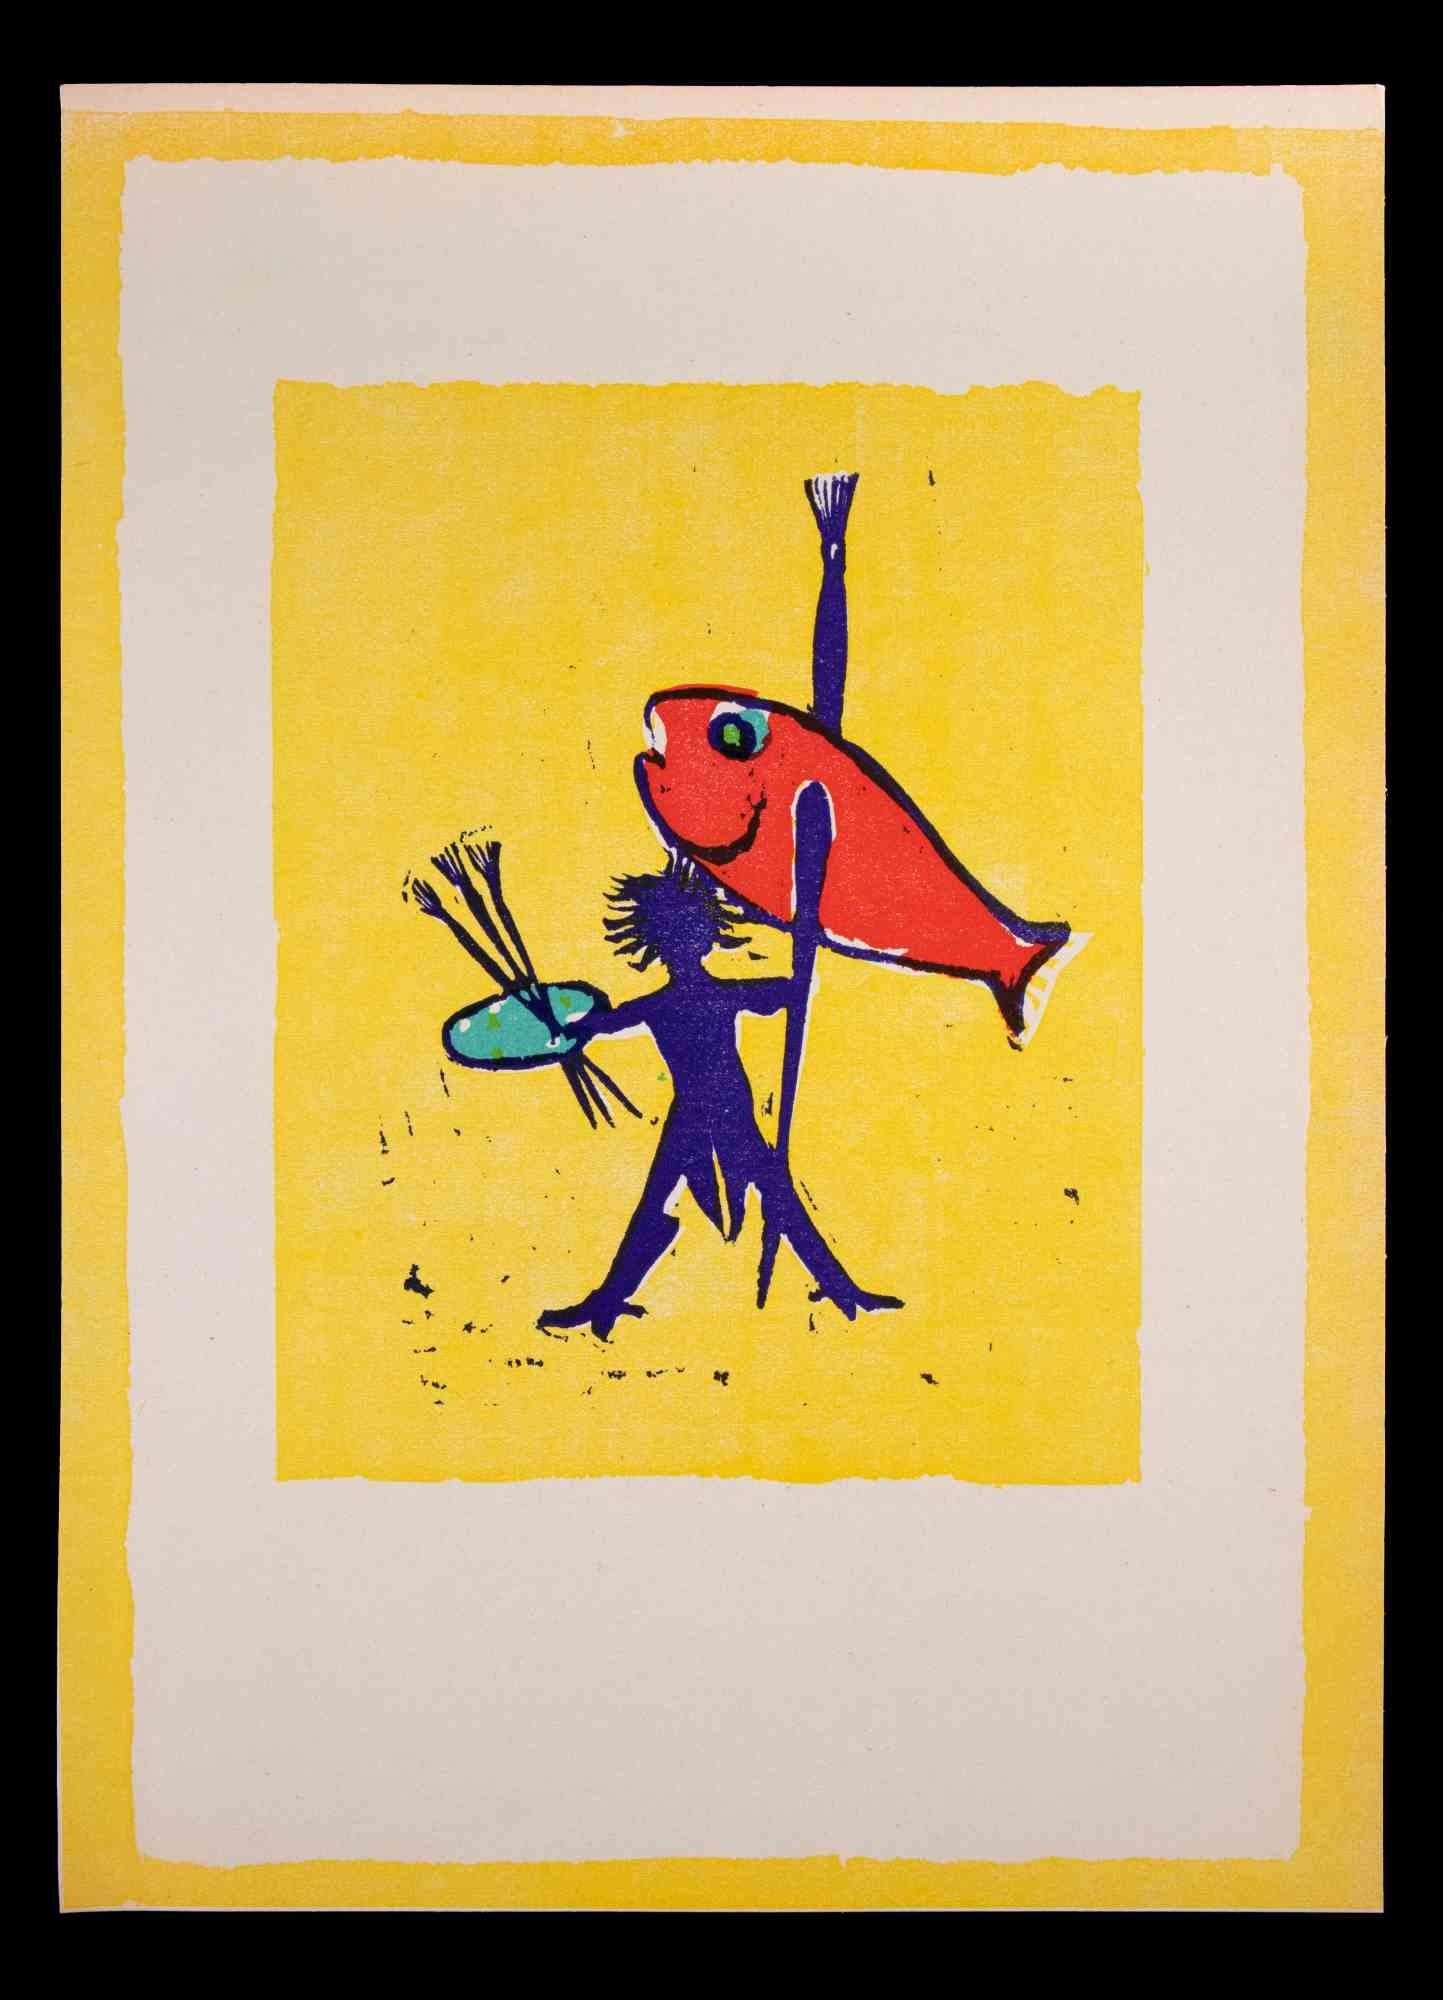 The Fisherman Painter - Original Linocut by Mino Maccari - 1951